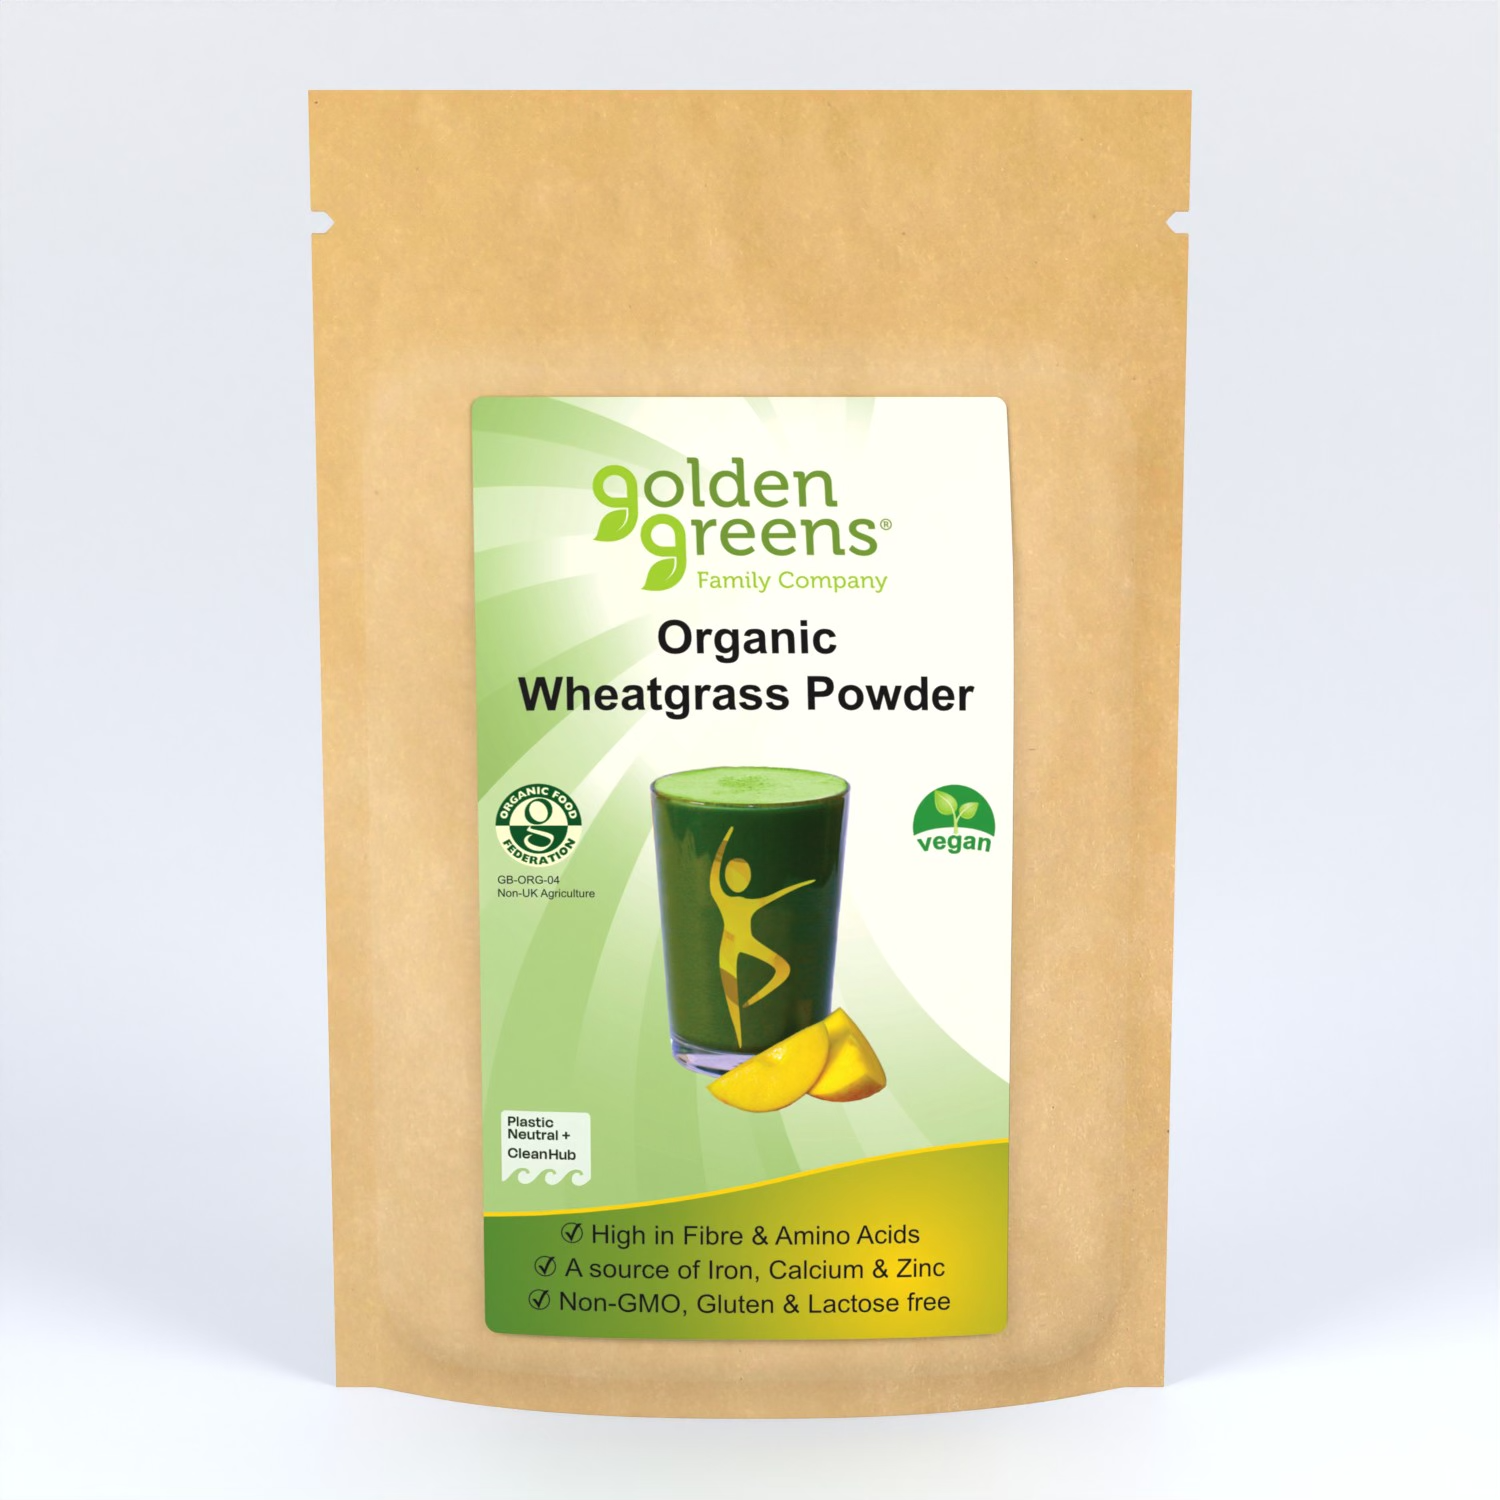 View Organic Wheatgrass Powder information